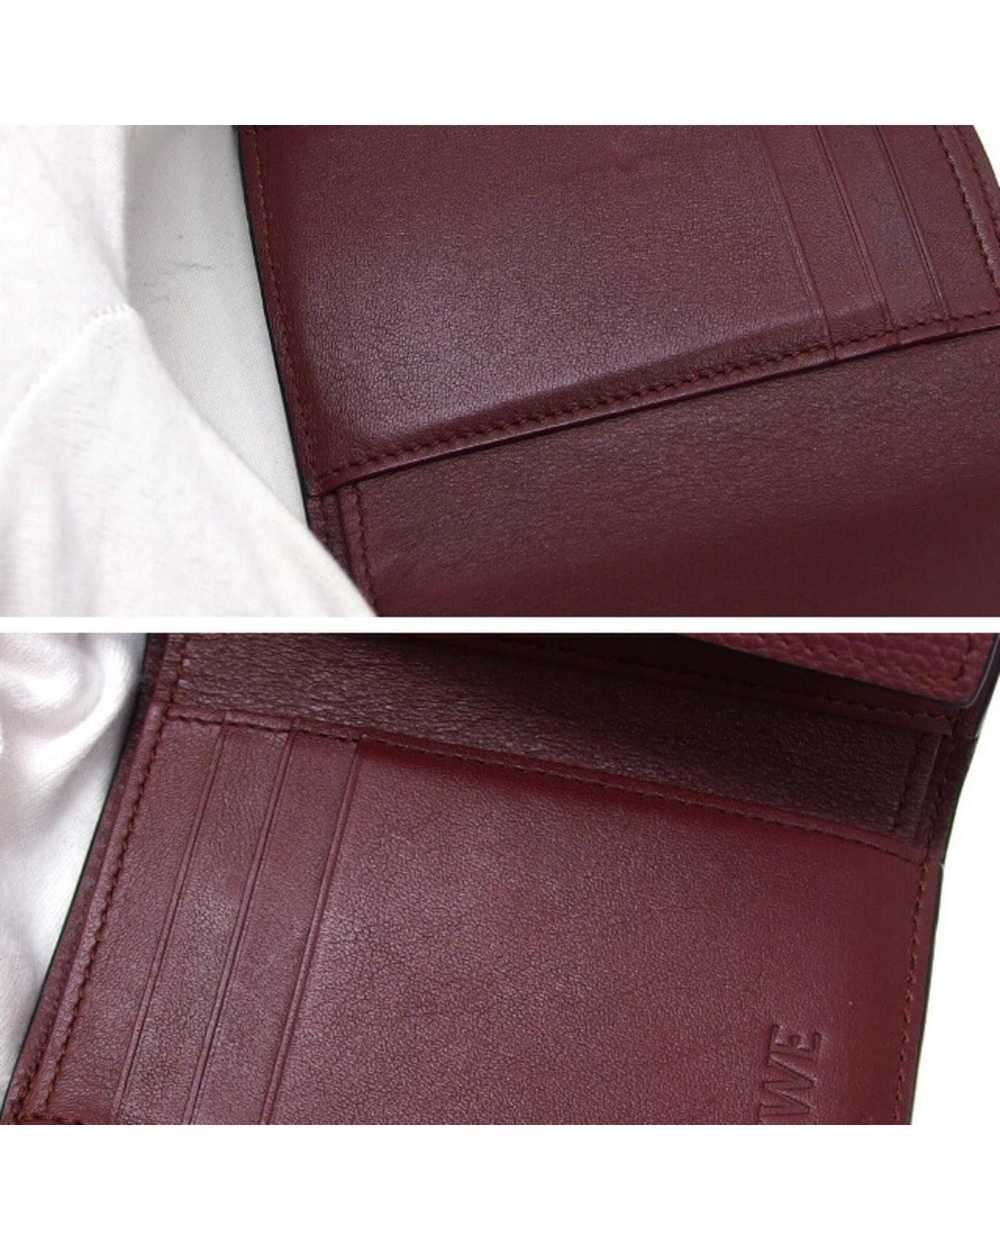 Loewe Leather Tri-Fold Wallet with Loewe Logo - image 7